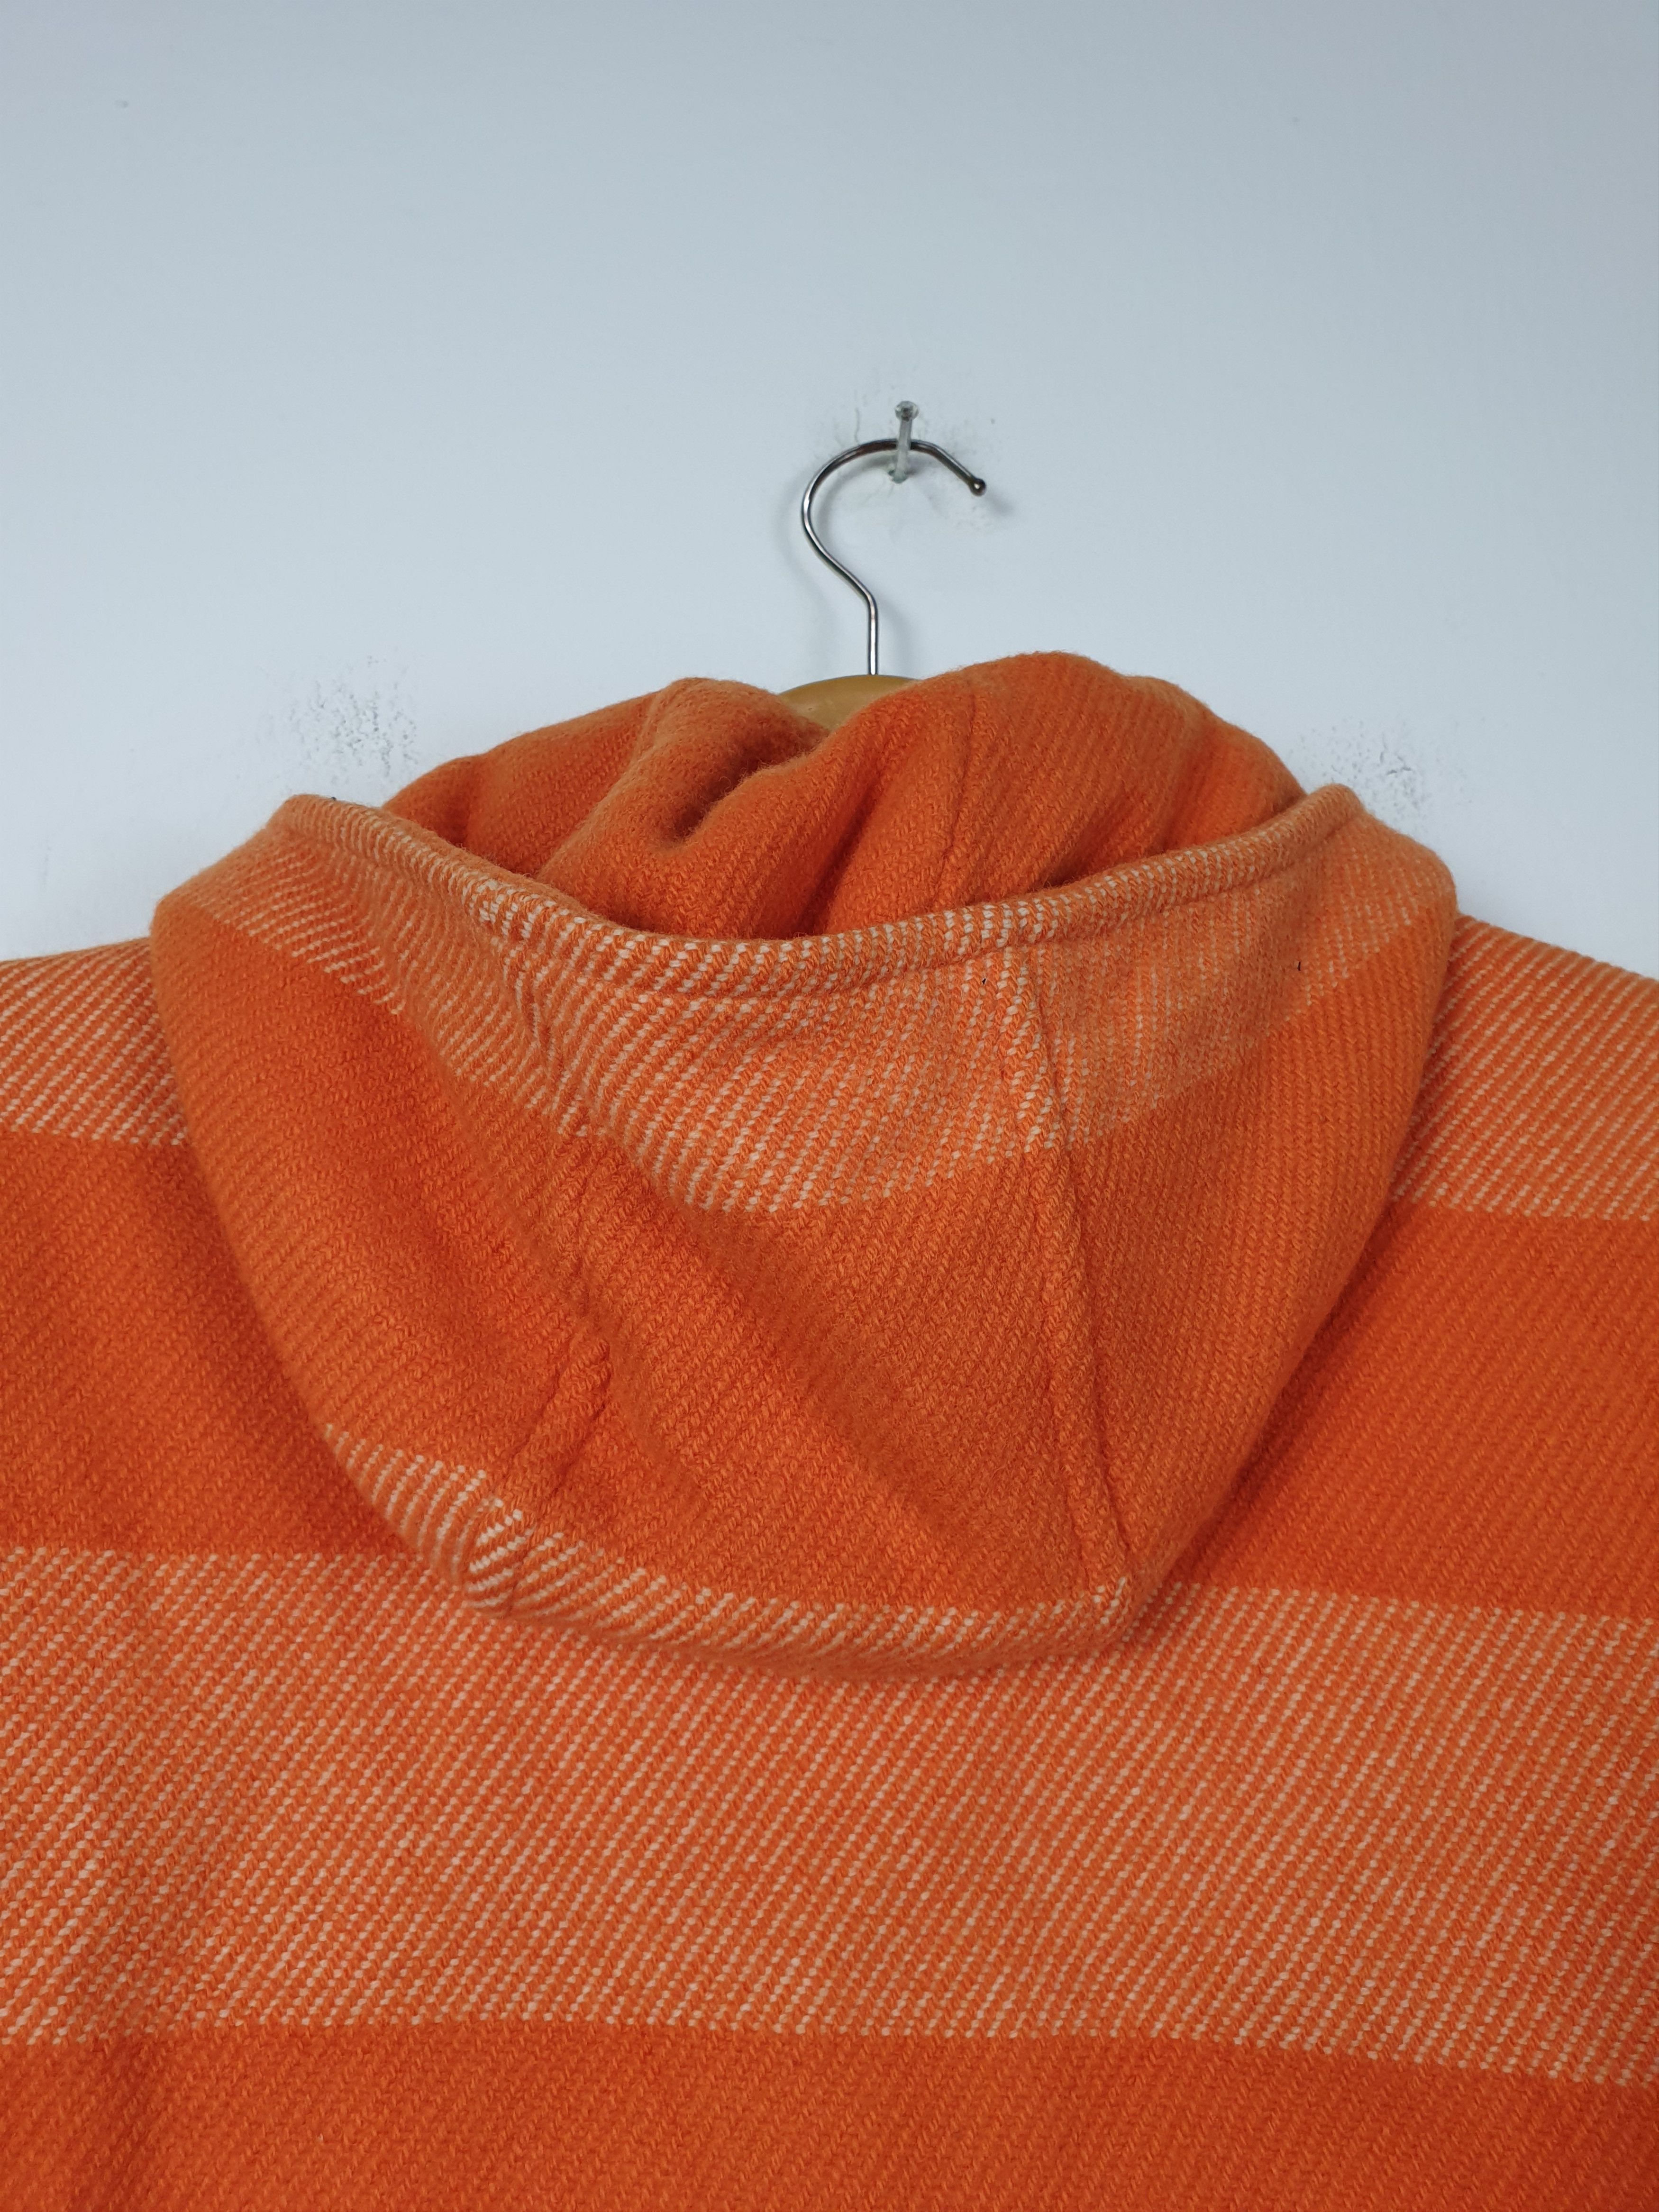 Vintage Vintage 90's COURREGES Wool Striped Hoodie Jacket Size US S / EU 44-46 / 1 - 2 Preview